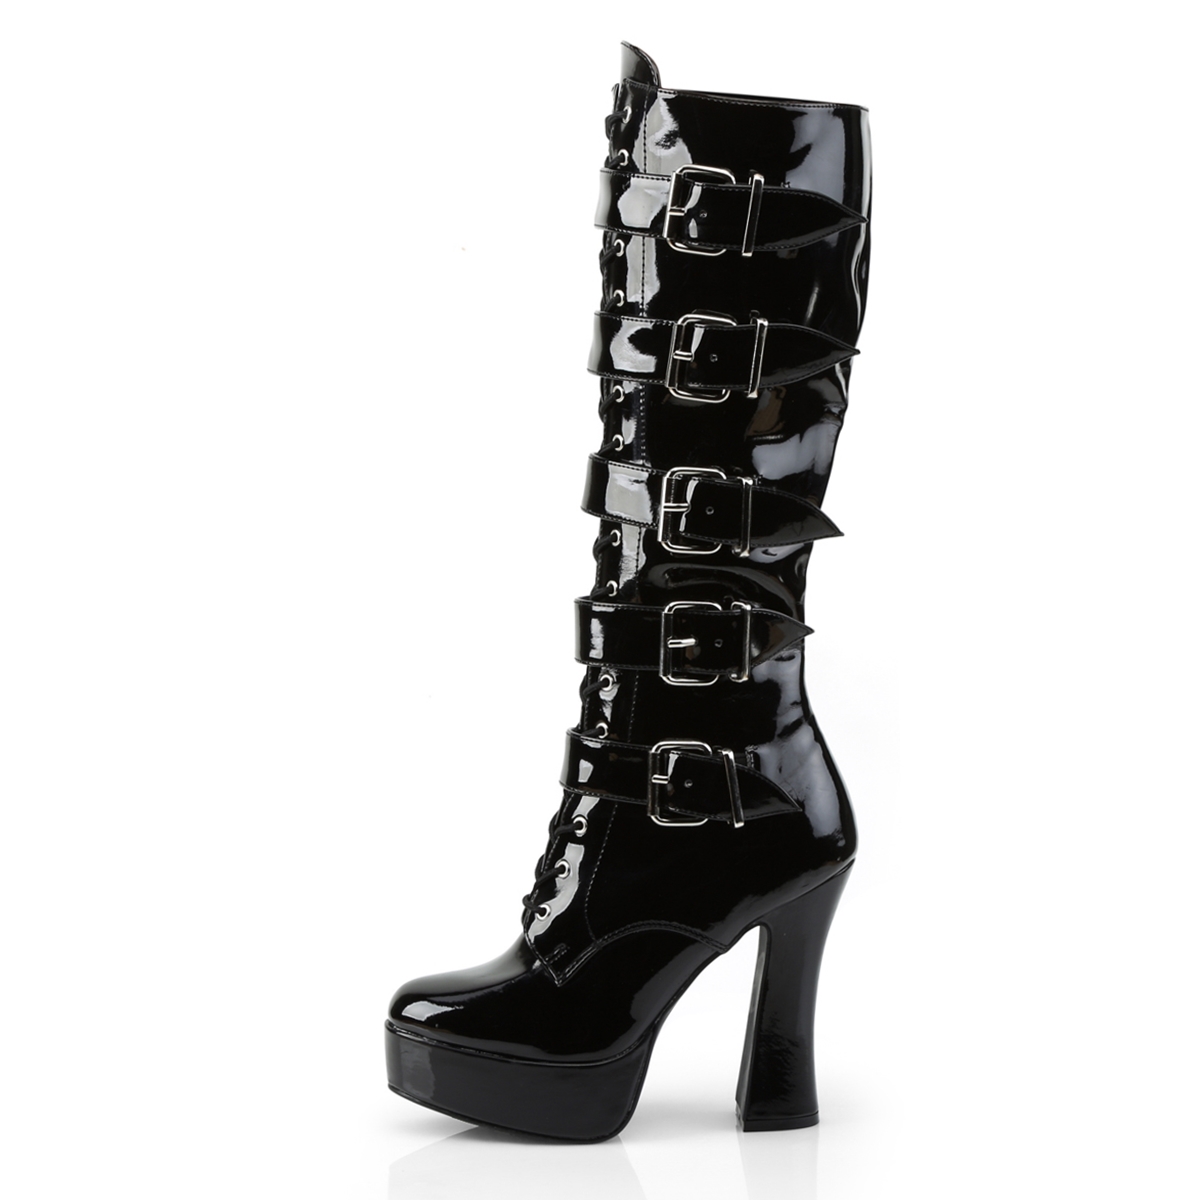 Kinky laklaarzen met gespen en brede hak | Zwarte lak laarzen met plateau en gespen